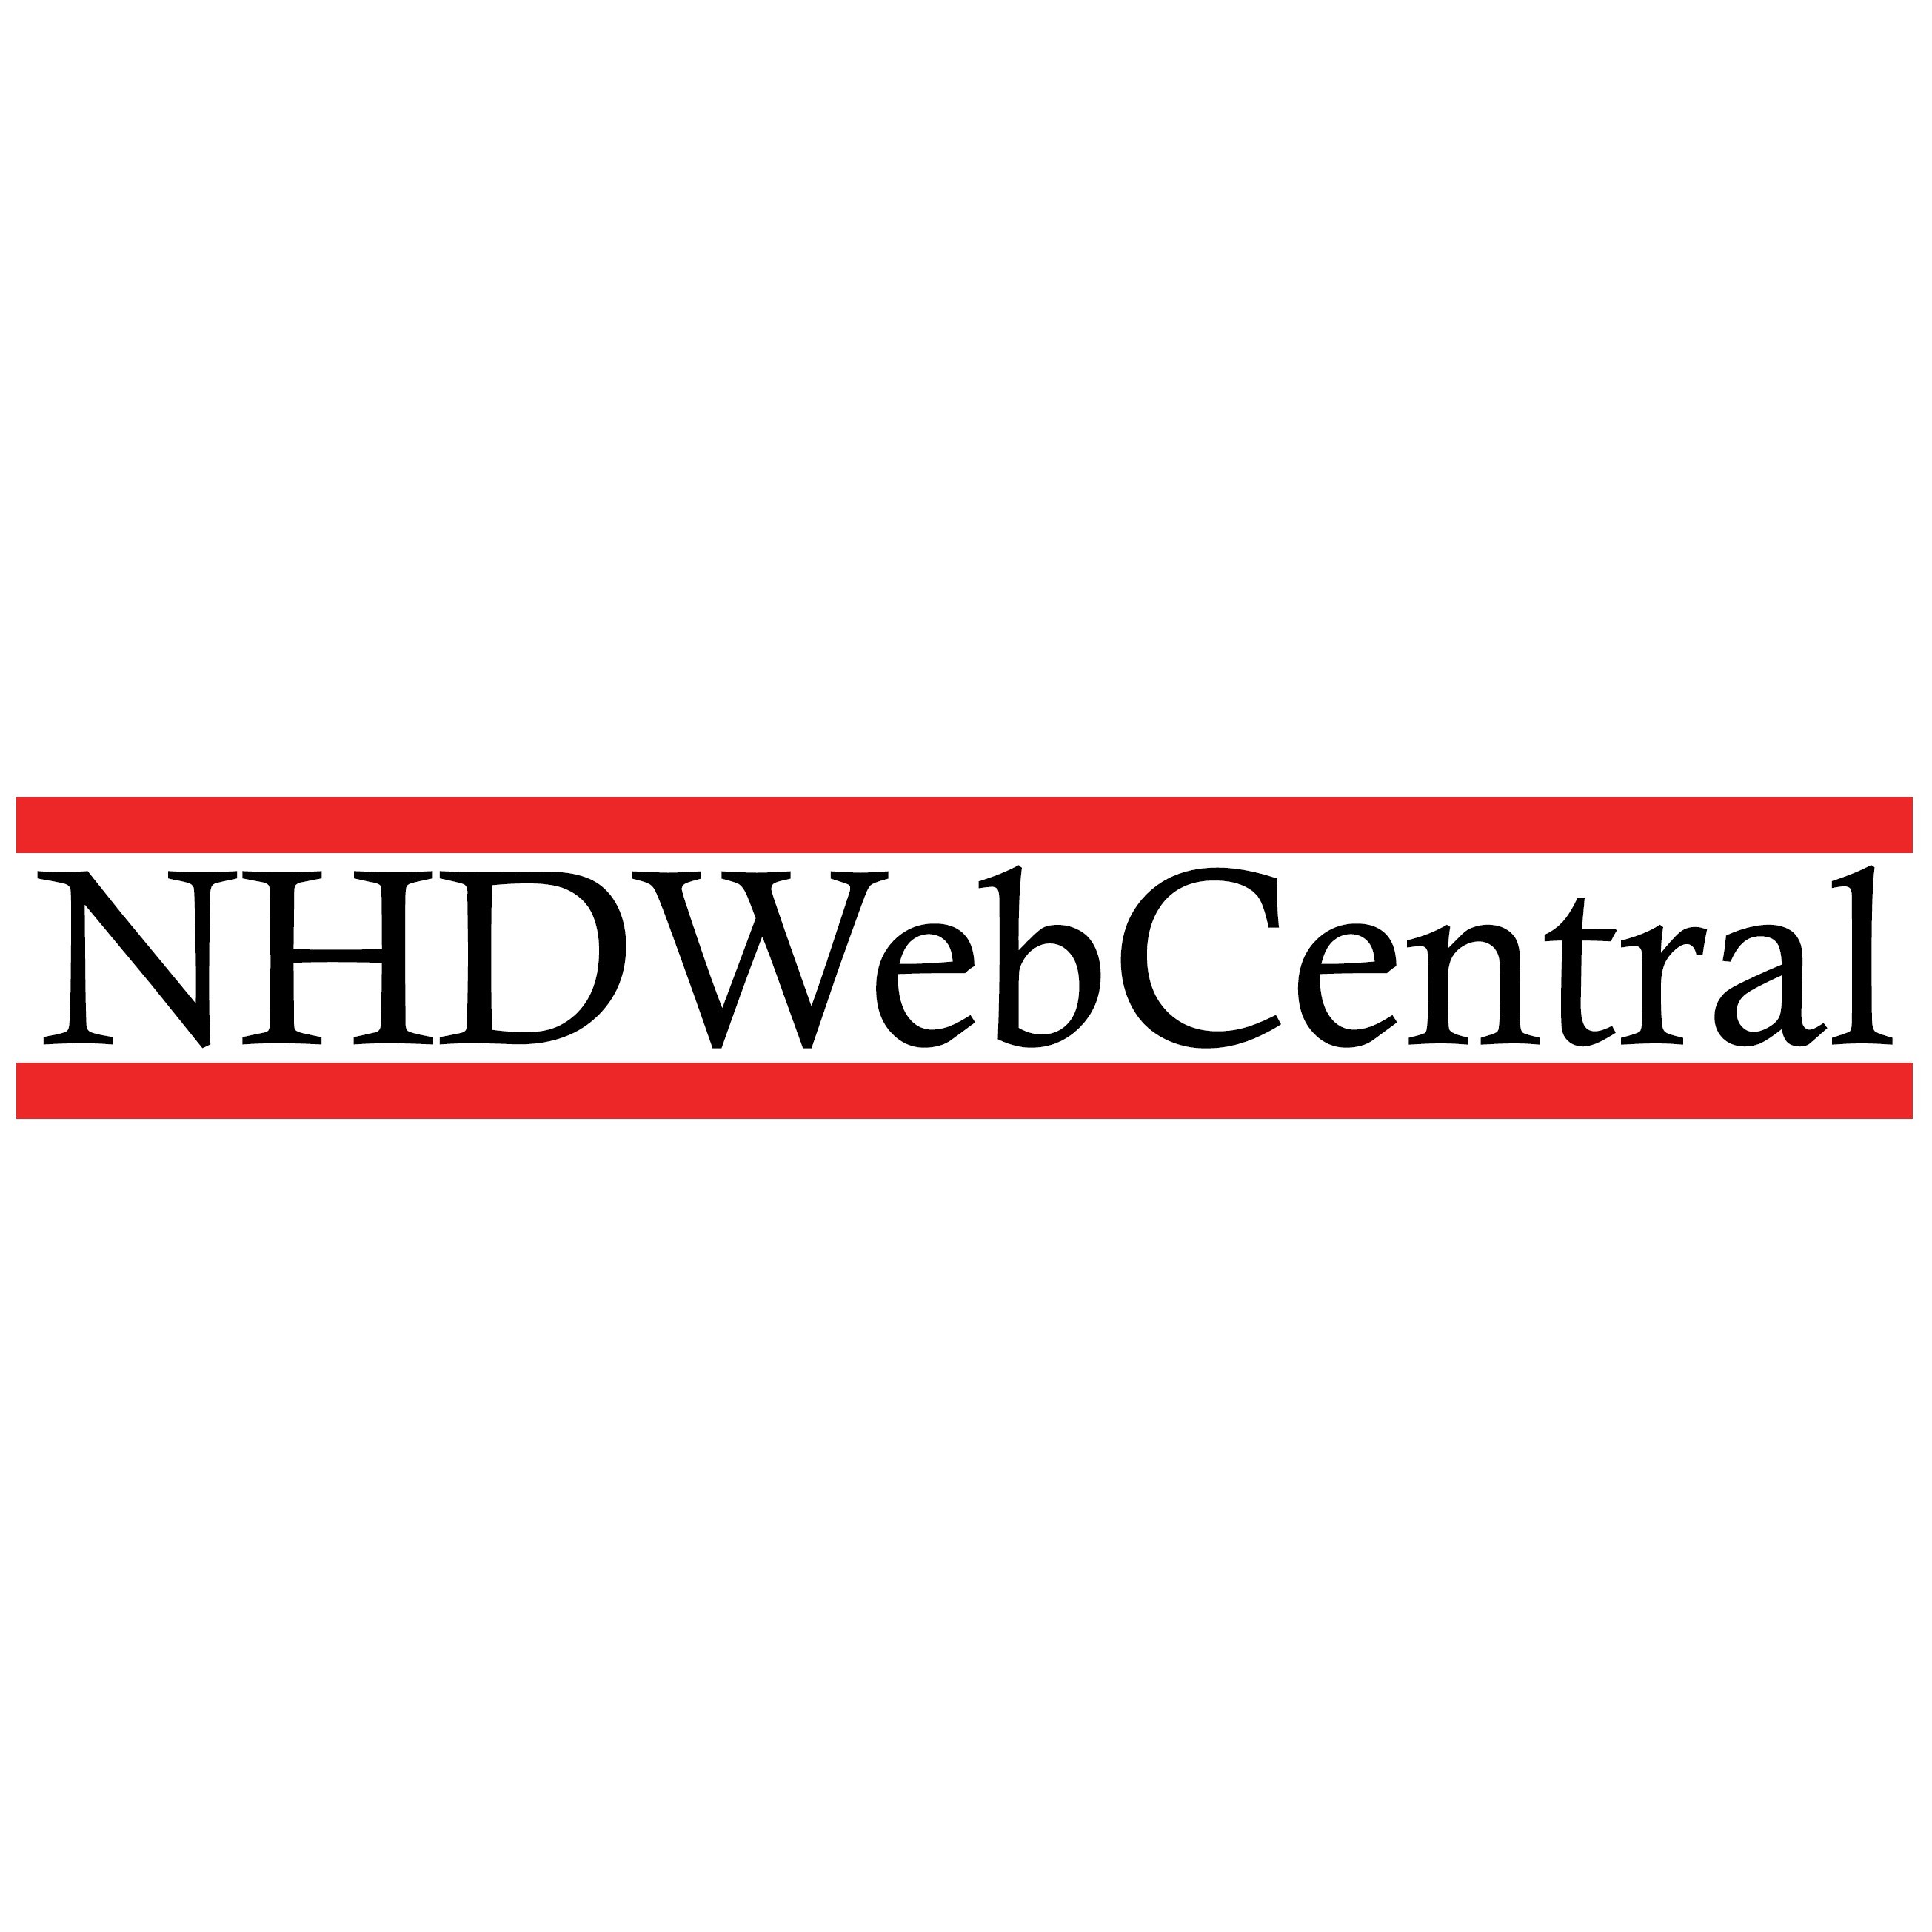 NHD Web Central logo